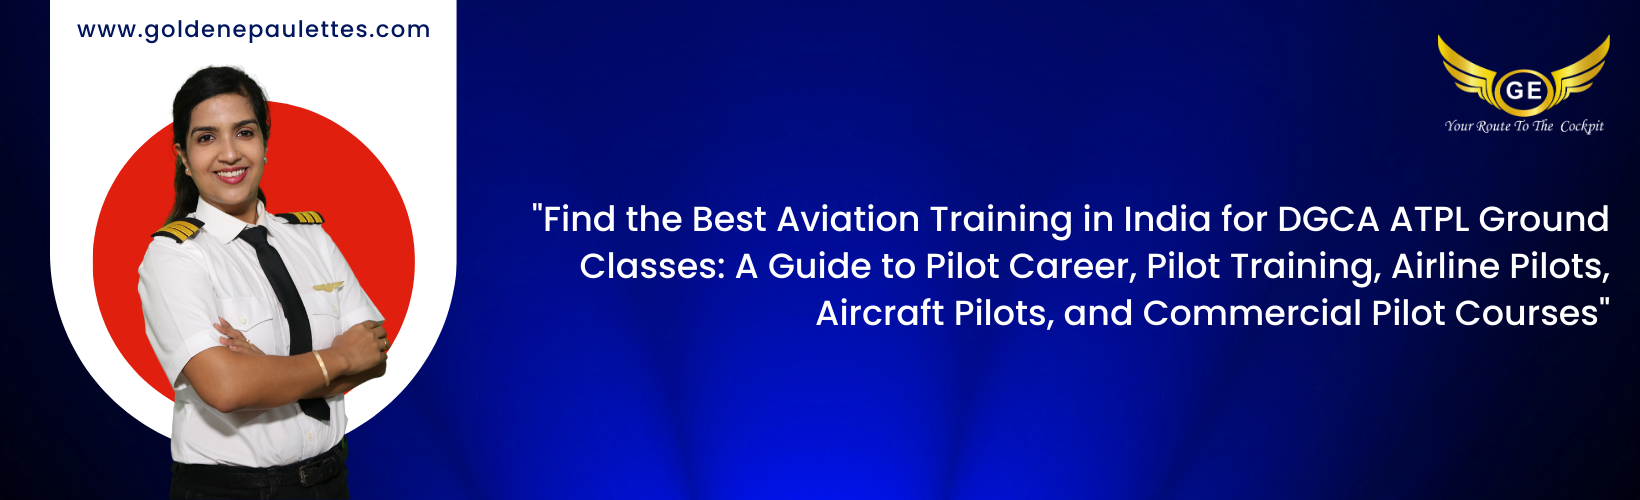 The Benefits of Taking DGCA ATPL Ground Classes as a Pilot Career